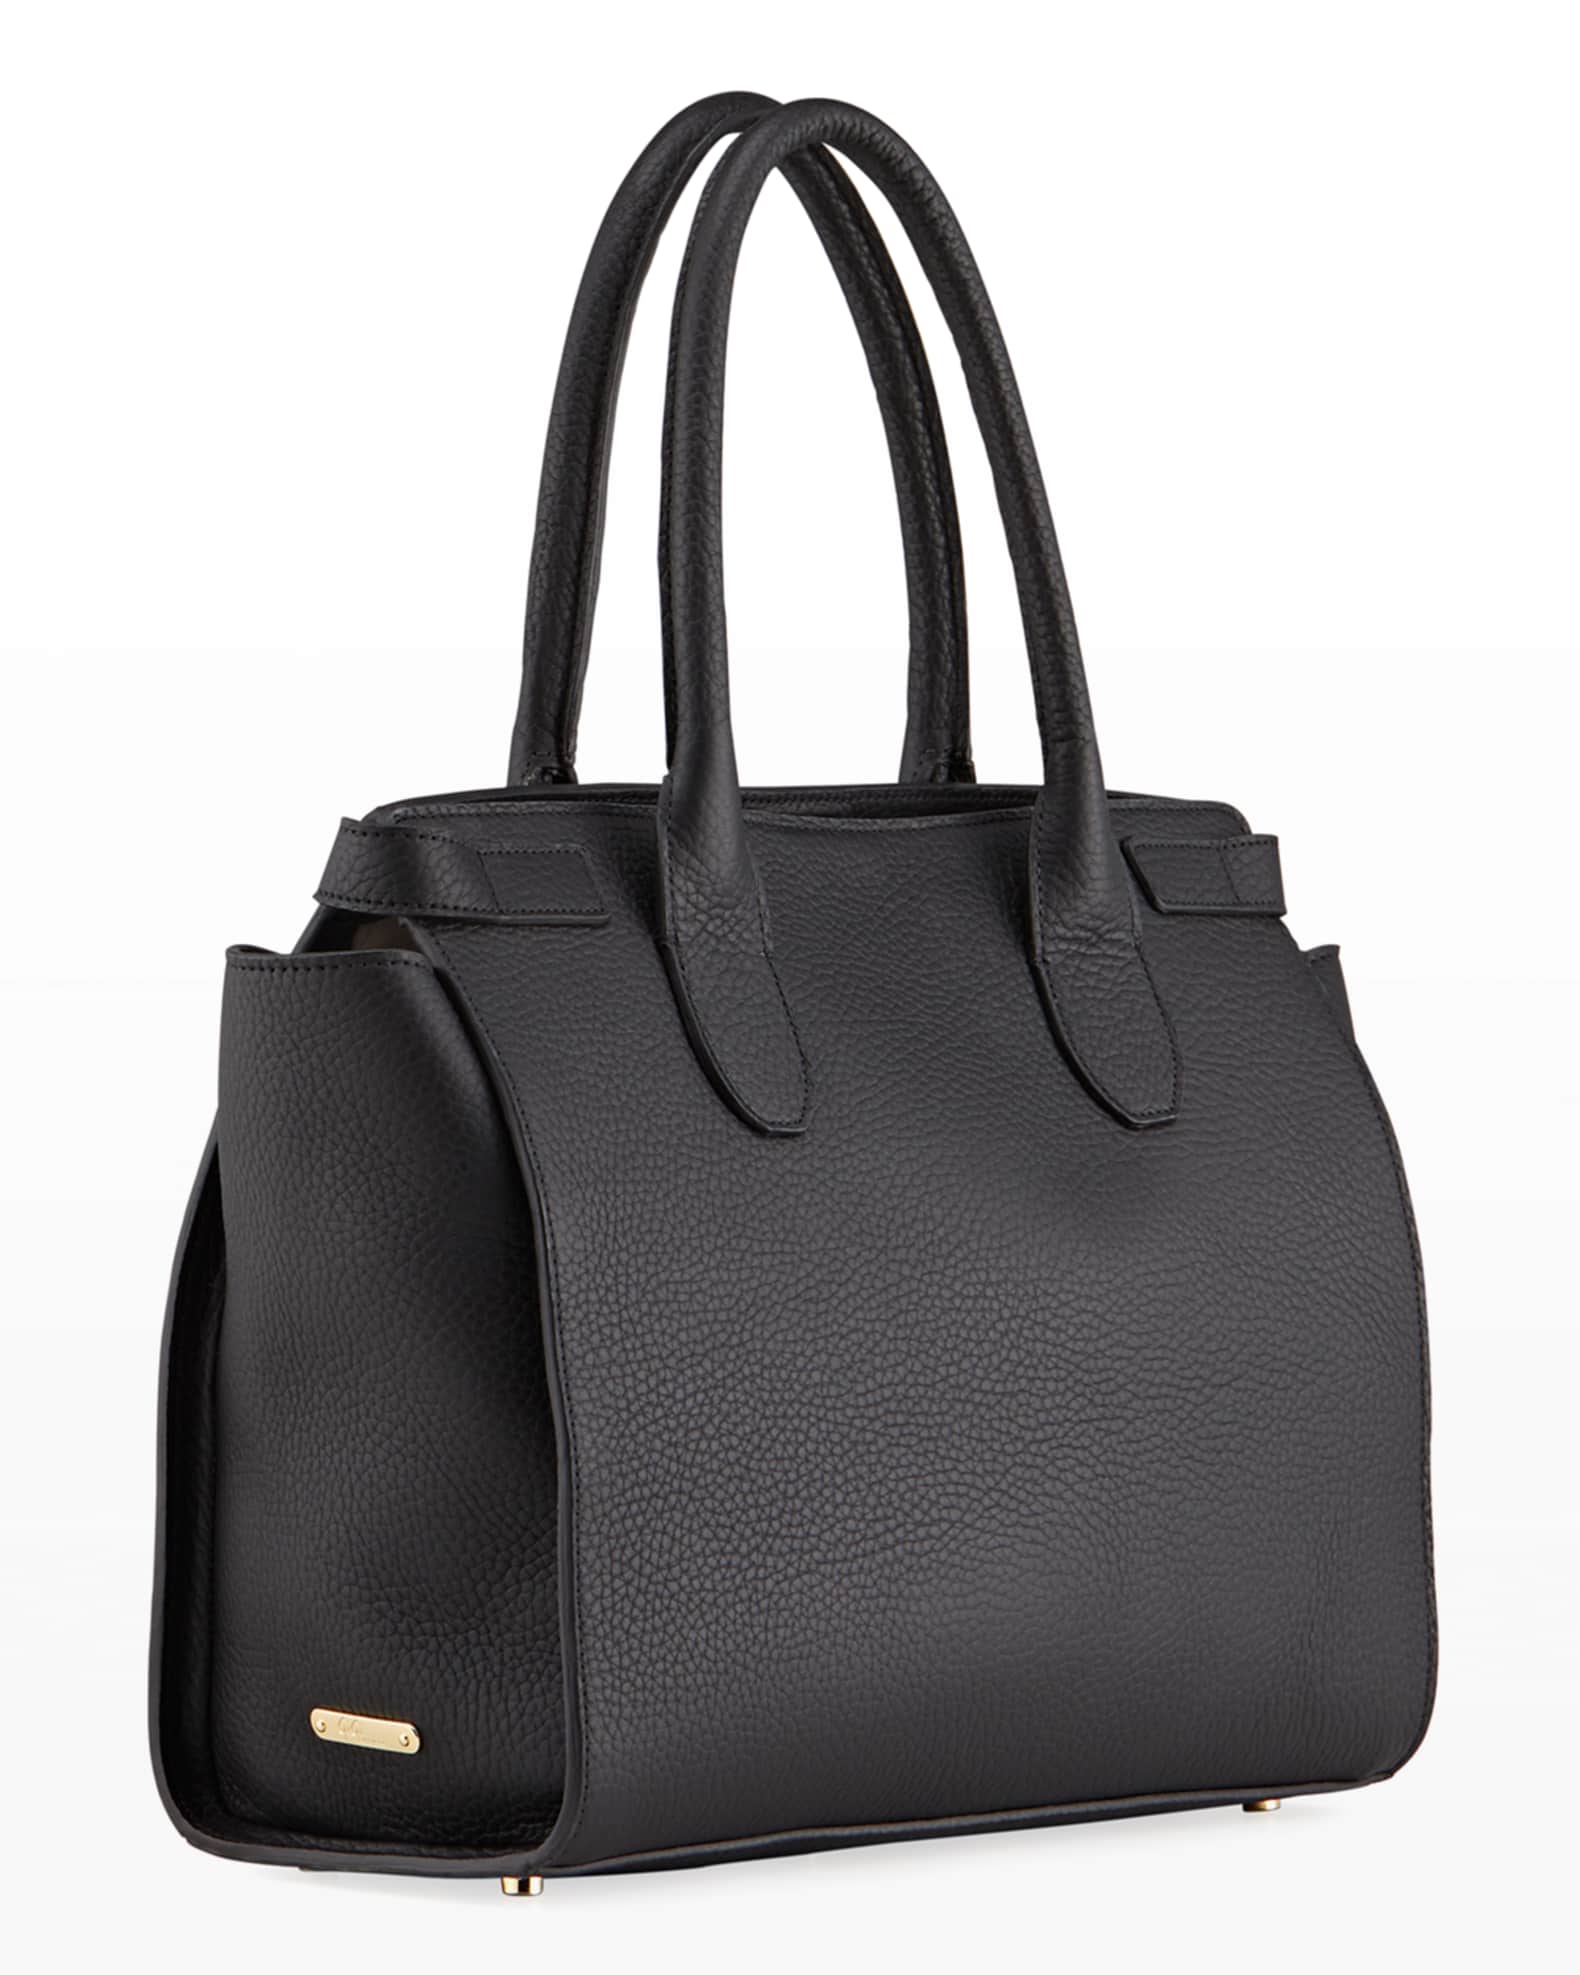 Gigi New York Reese Leather Tote Bag | Neiman Marcus